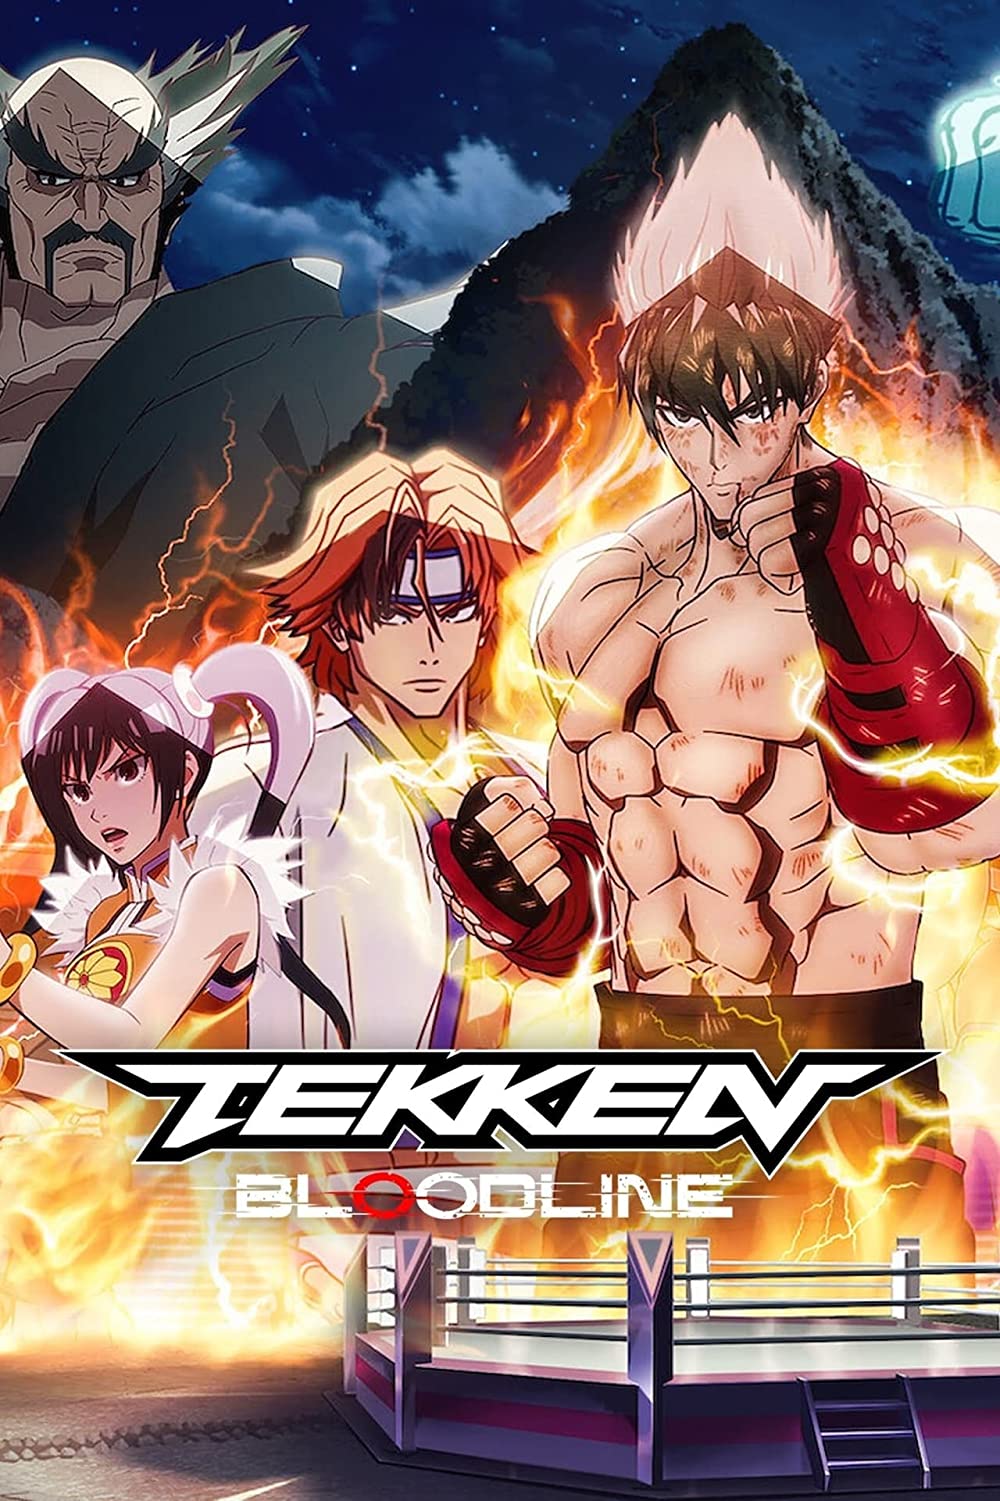 Tekken Bloodline Netflix anime: Release date, characters, voice